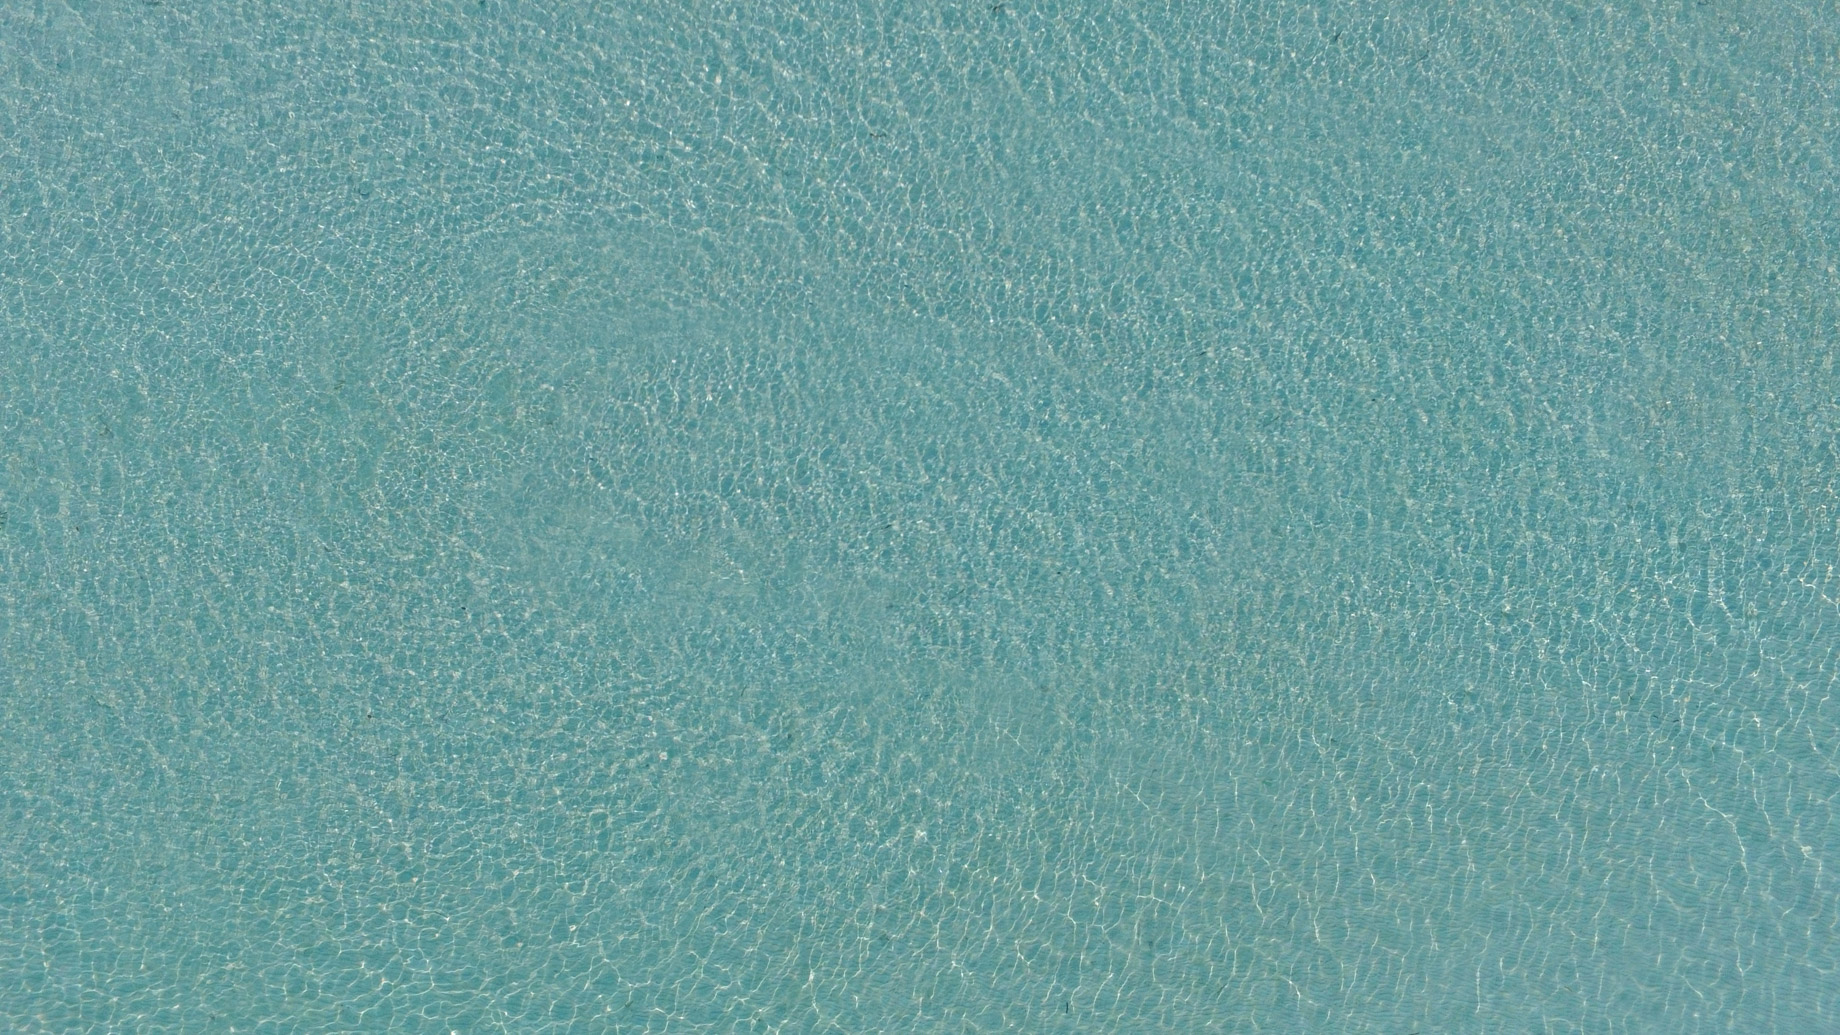 Soneva Jani Resort - Noonu Atoll, Medhufaru, Maldives - Tropical Ocean Water